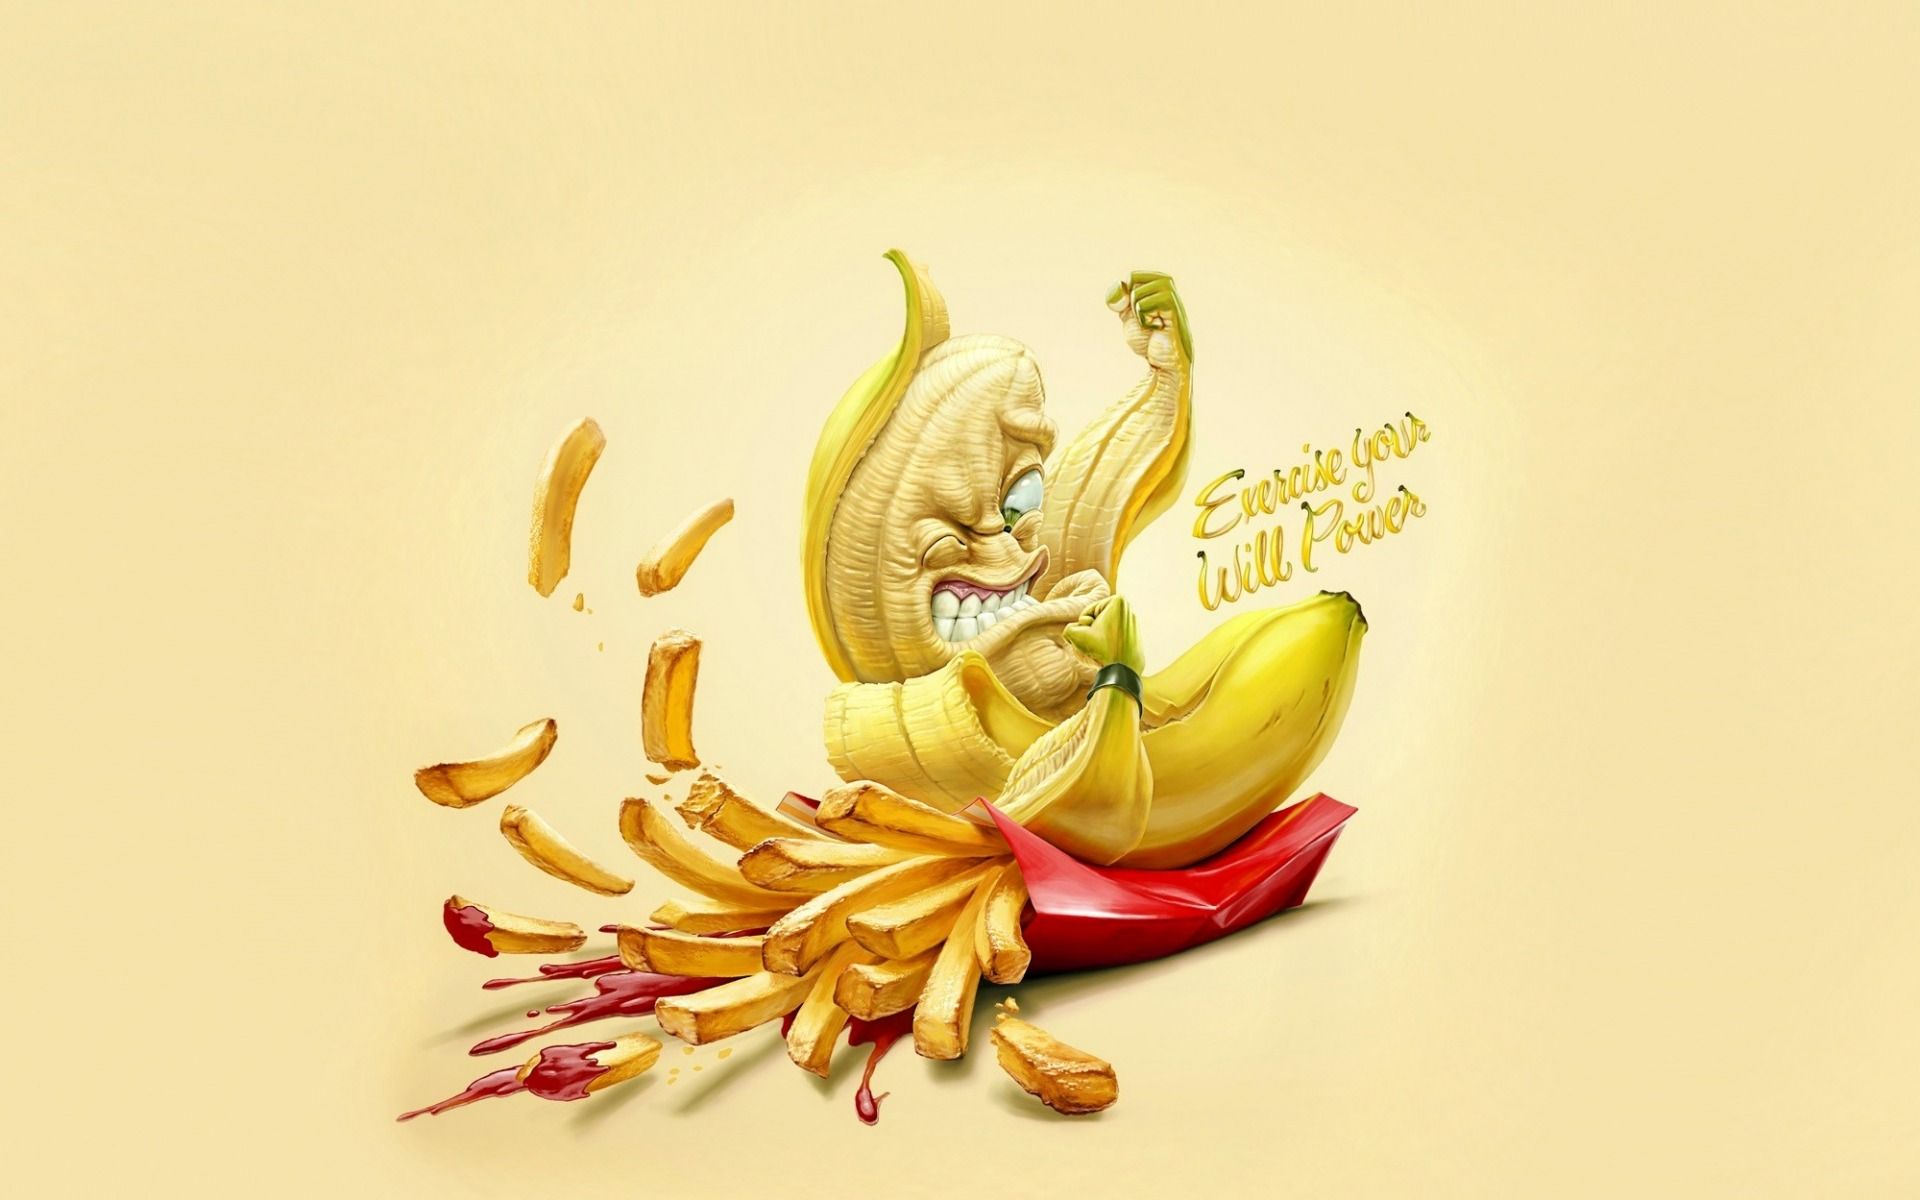 Креативный банан